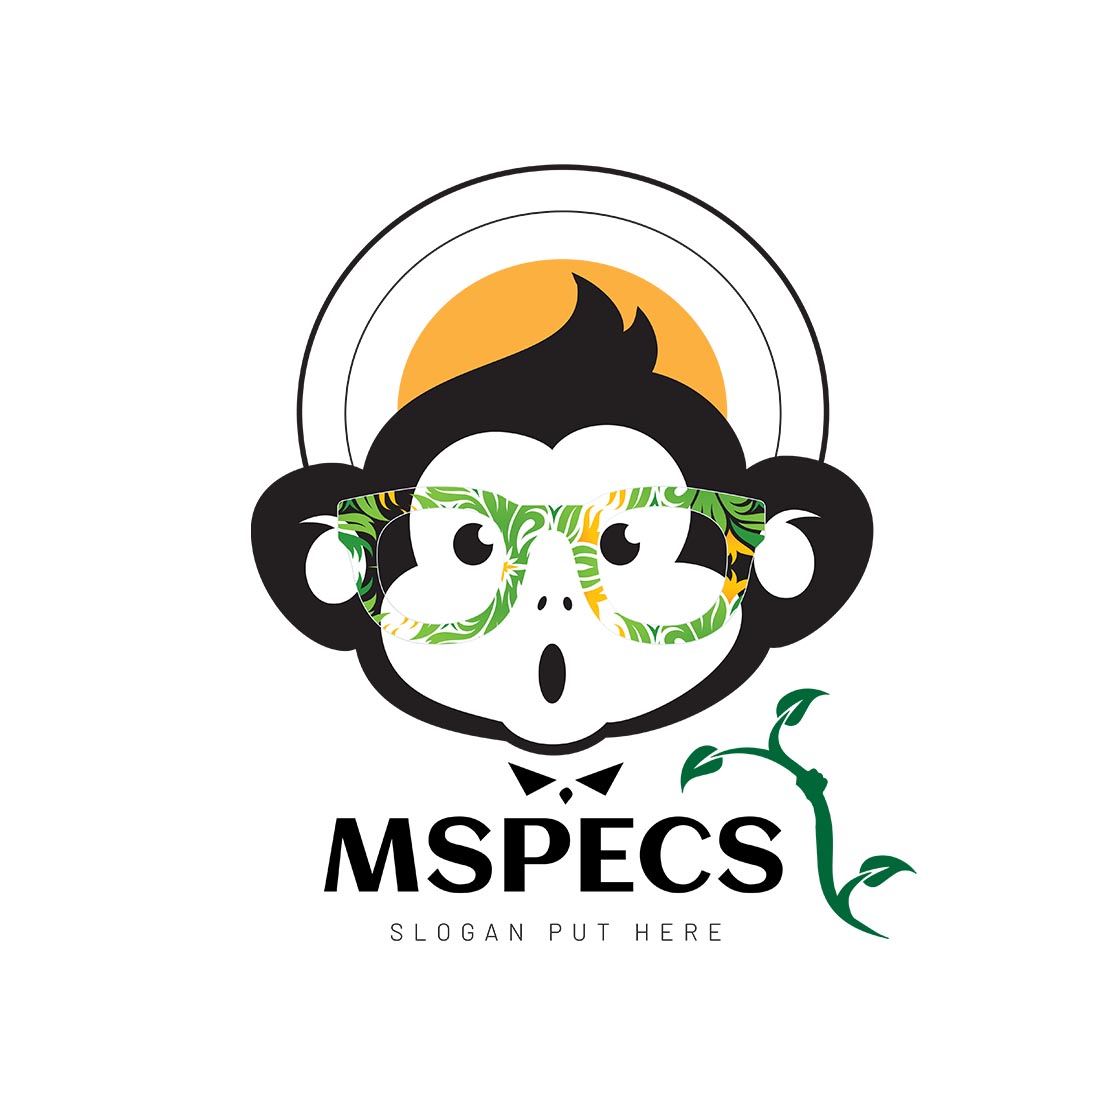 Specs Logo design preview image.